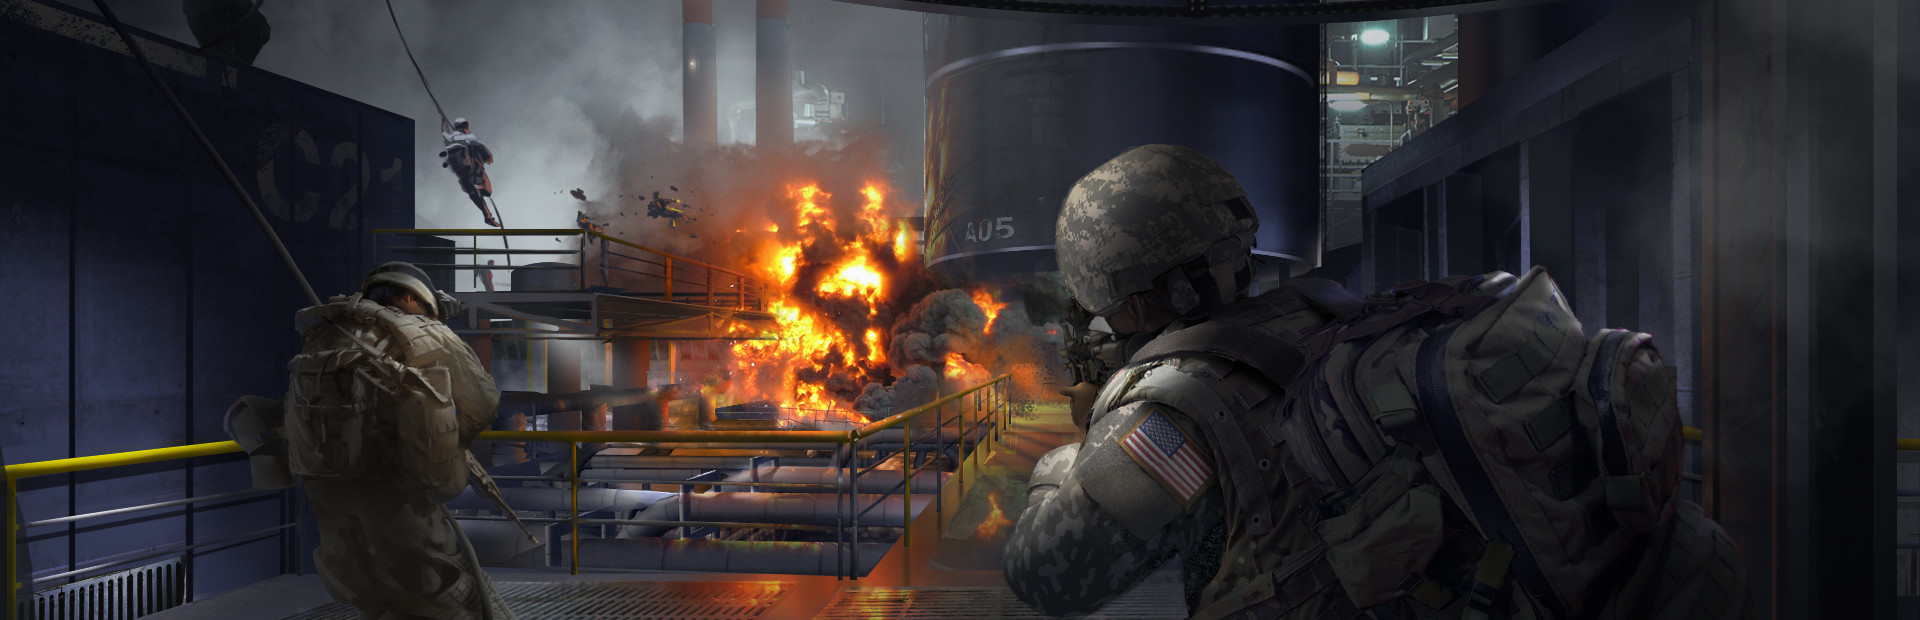 War Trigger 2 cover image